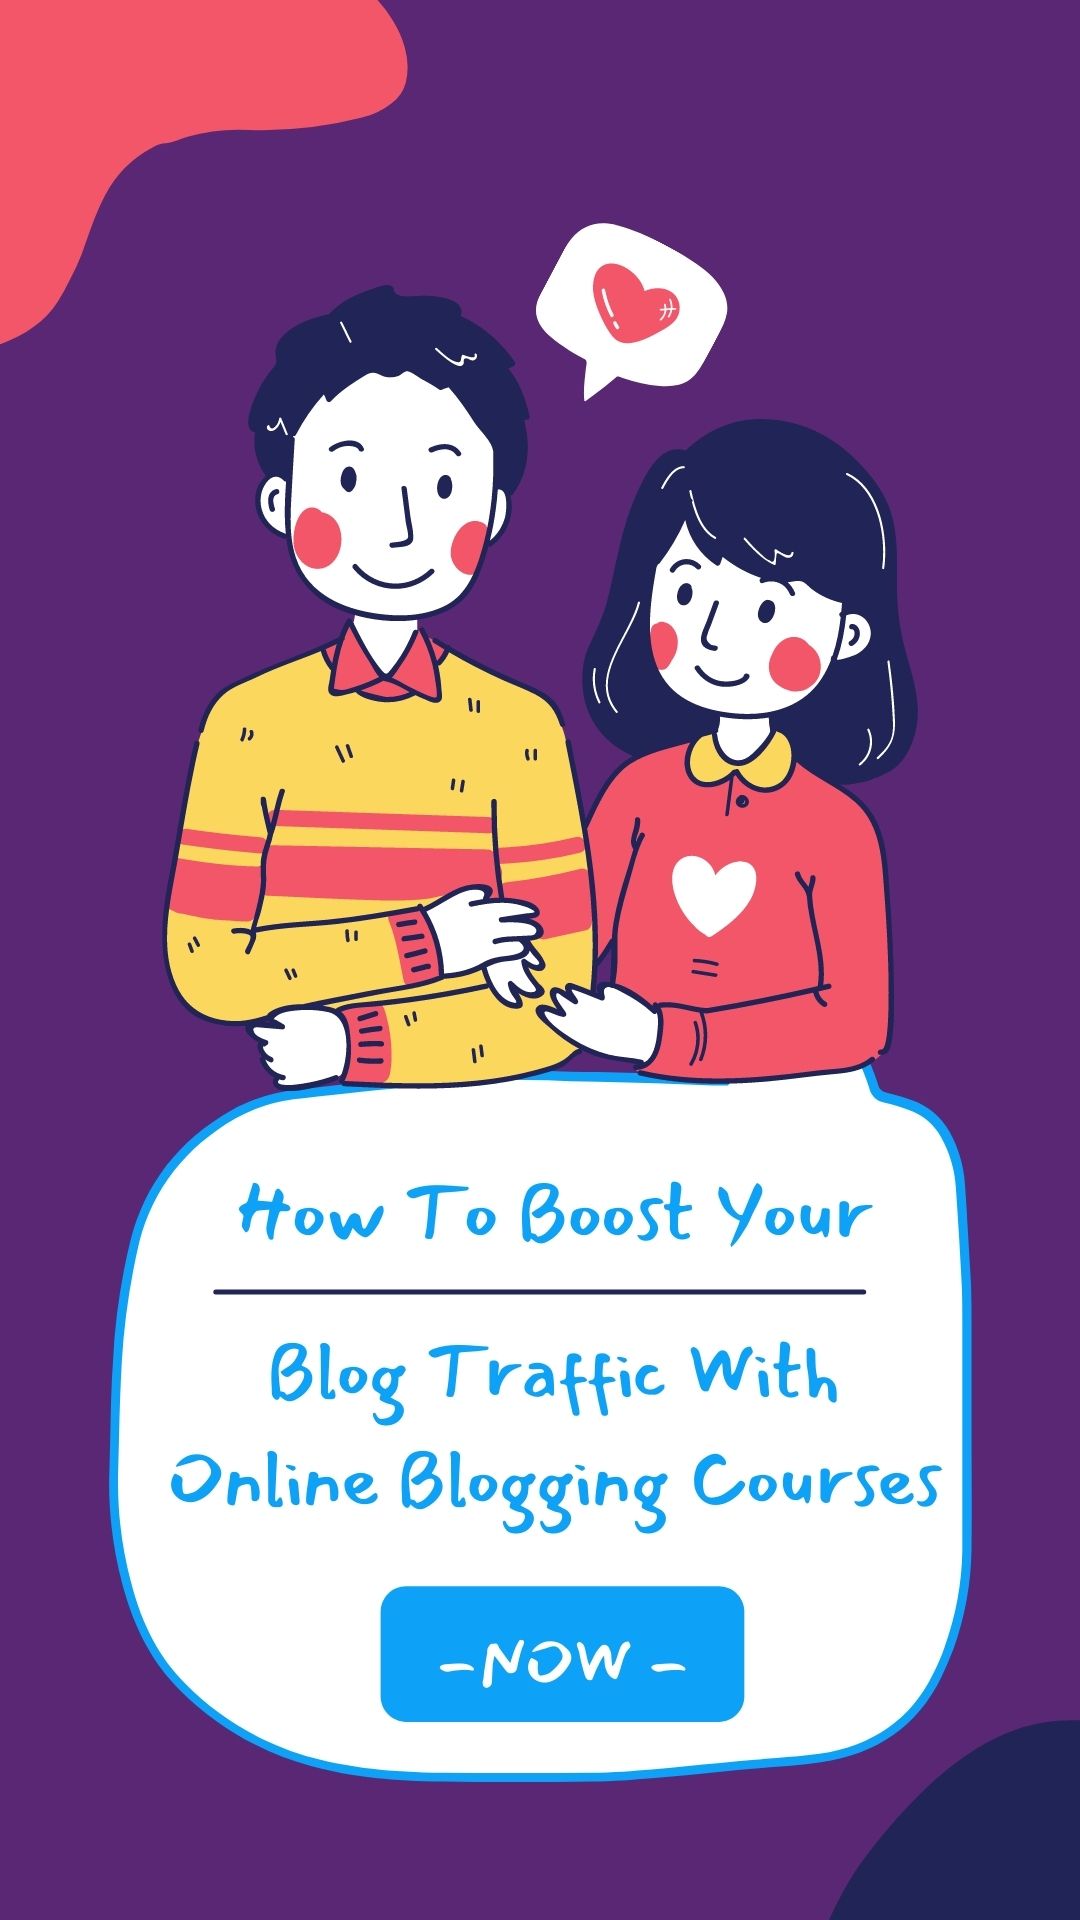 <img src="boost.jpg" alt="boost your blog traffic purple graphic"/> 